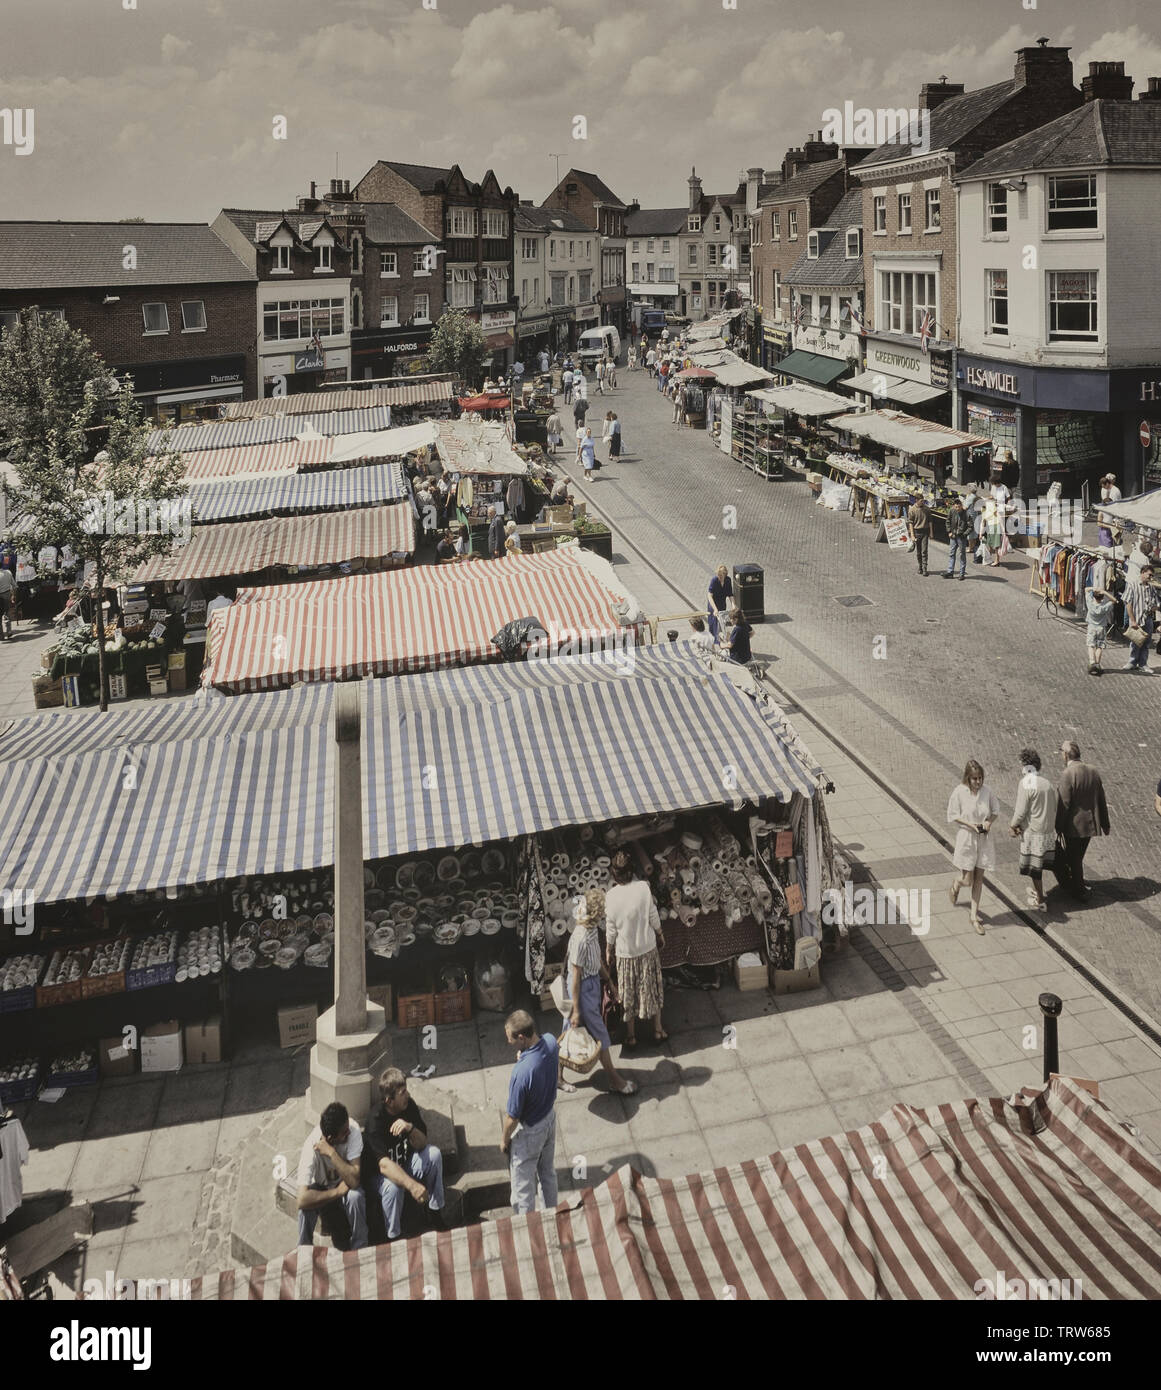 Market Place, melton mowbray, leicestershire, England, Regno Unito Foto Stock